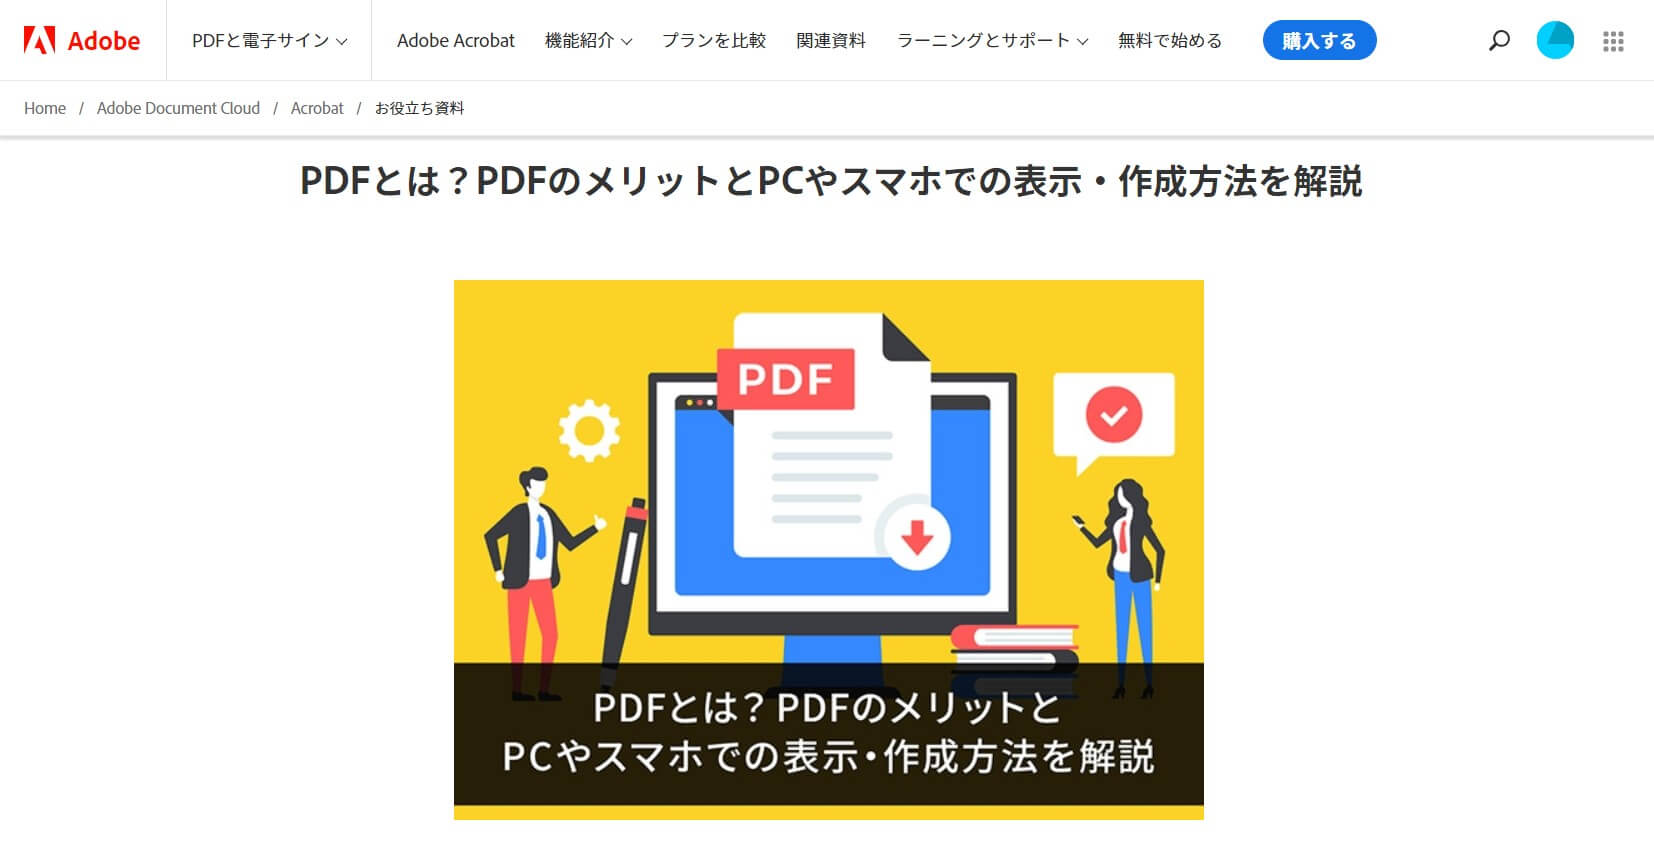 PDFとは